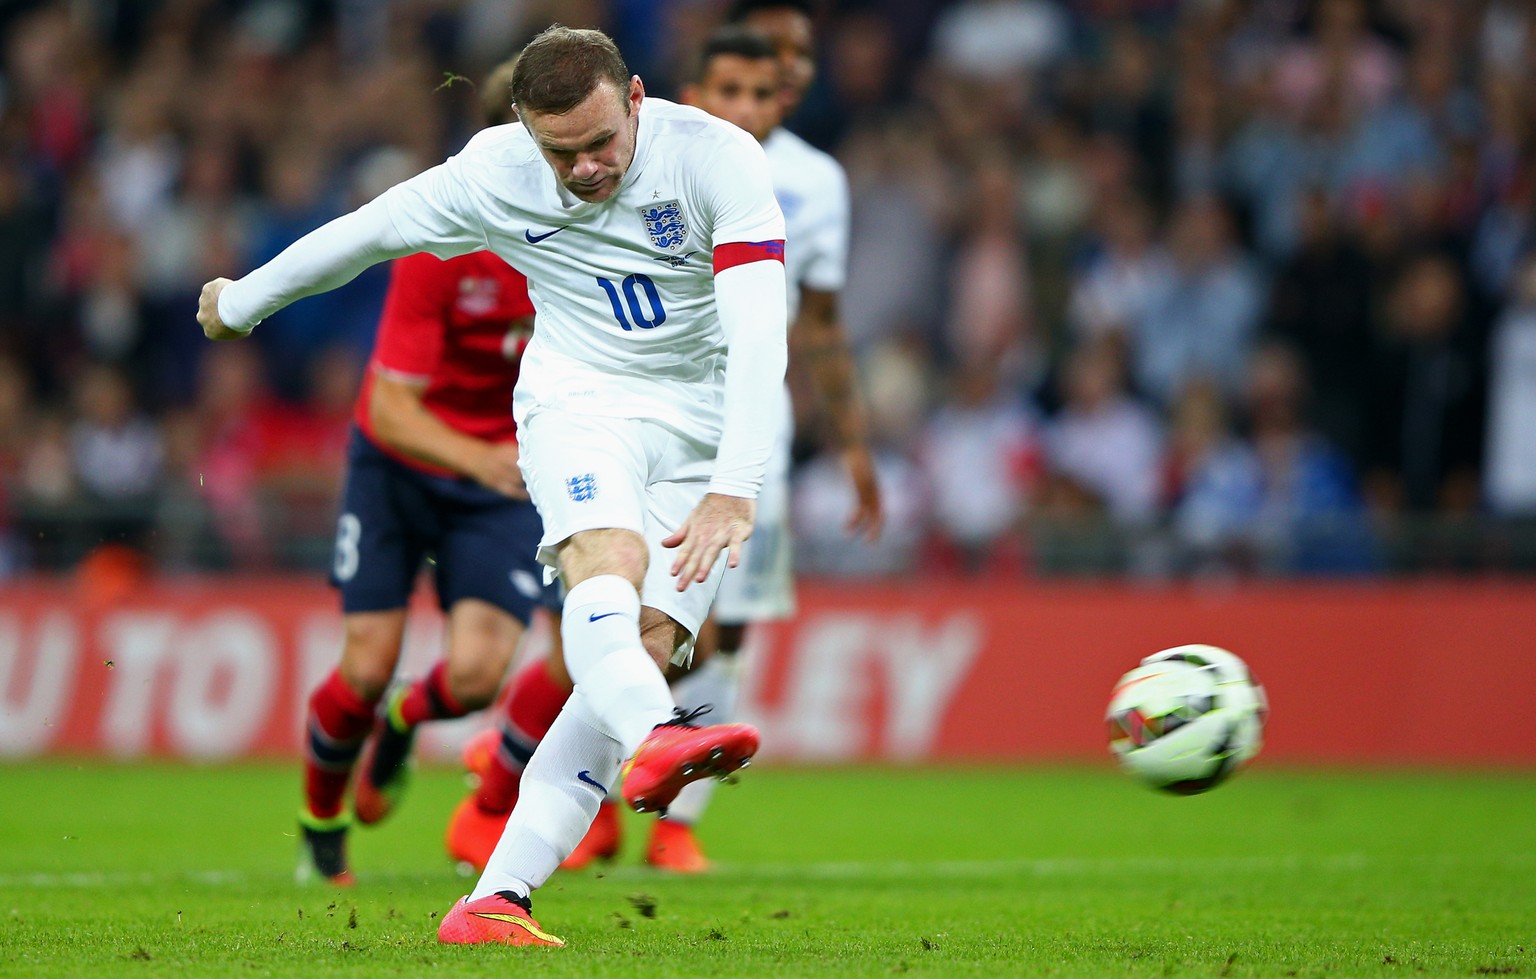 Voll drauf: Wayne Rooney hämmert einen Foulpenalty zum Siegtor ins Netz.